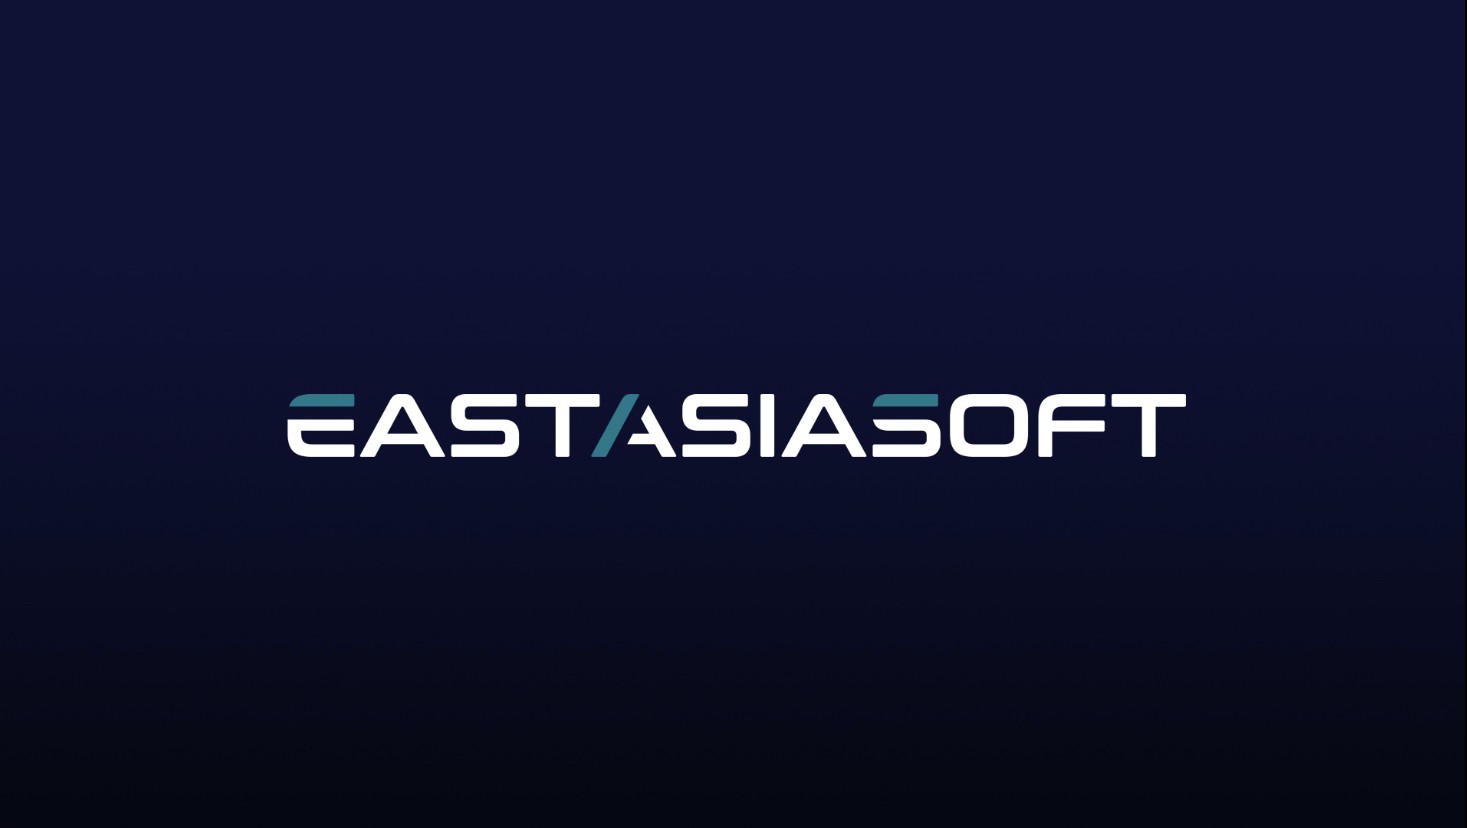 Eastasiasoft